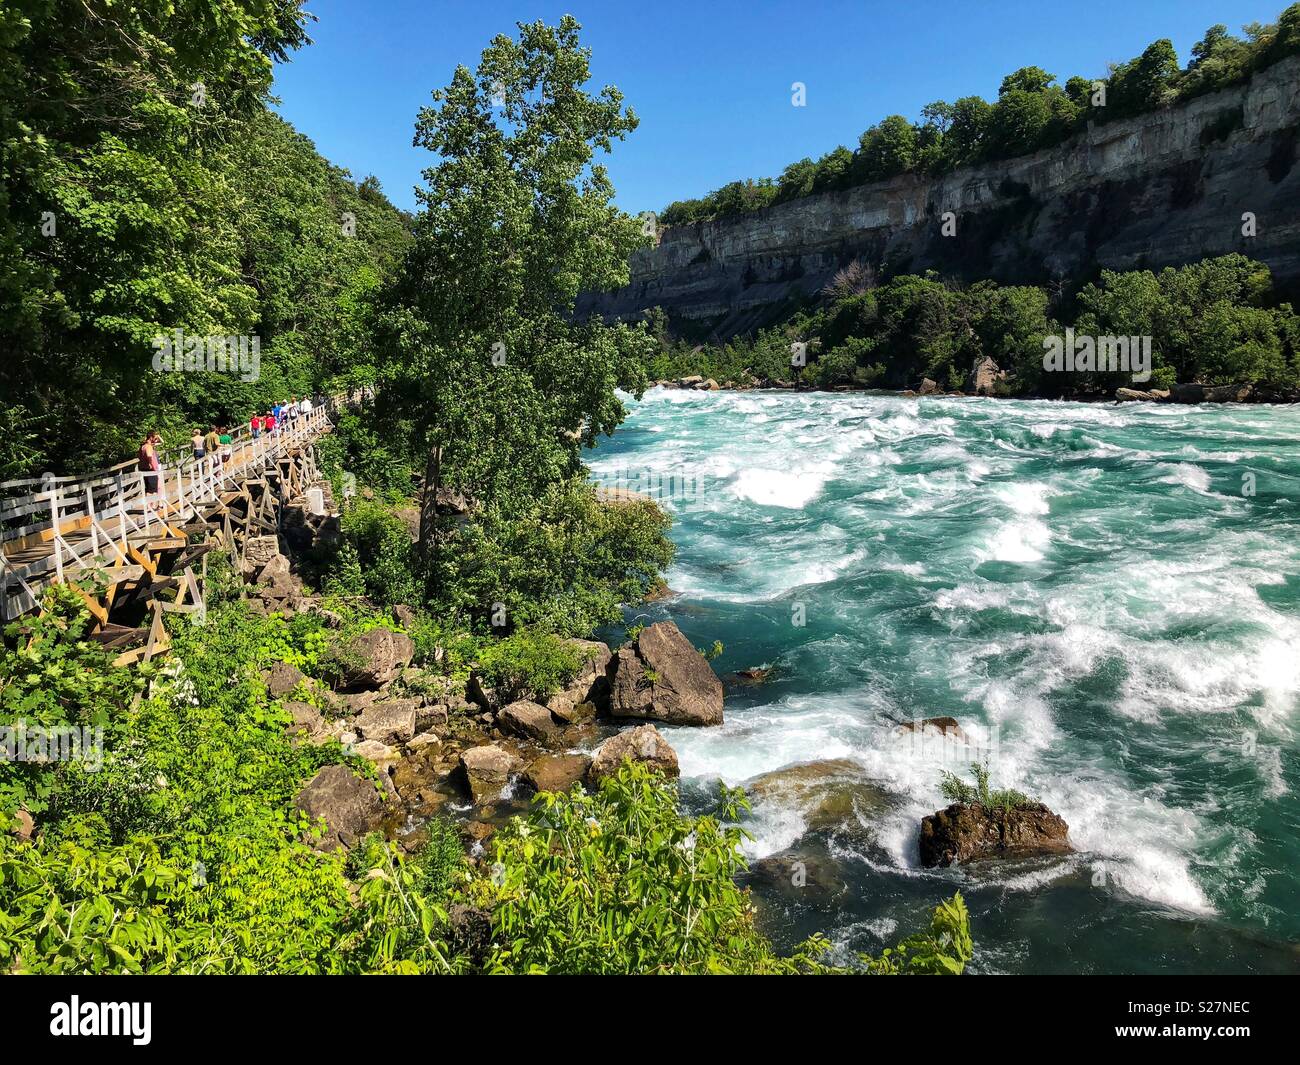 Les touristes à pied le long de la descente en eaux rapides de la rivière Niagara à Niagara Falls, Ontario, Canada Banque D'Images